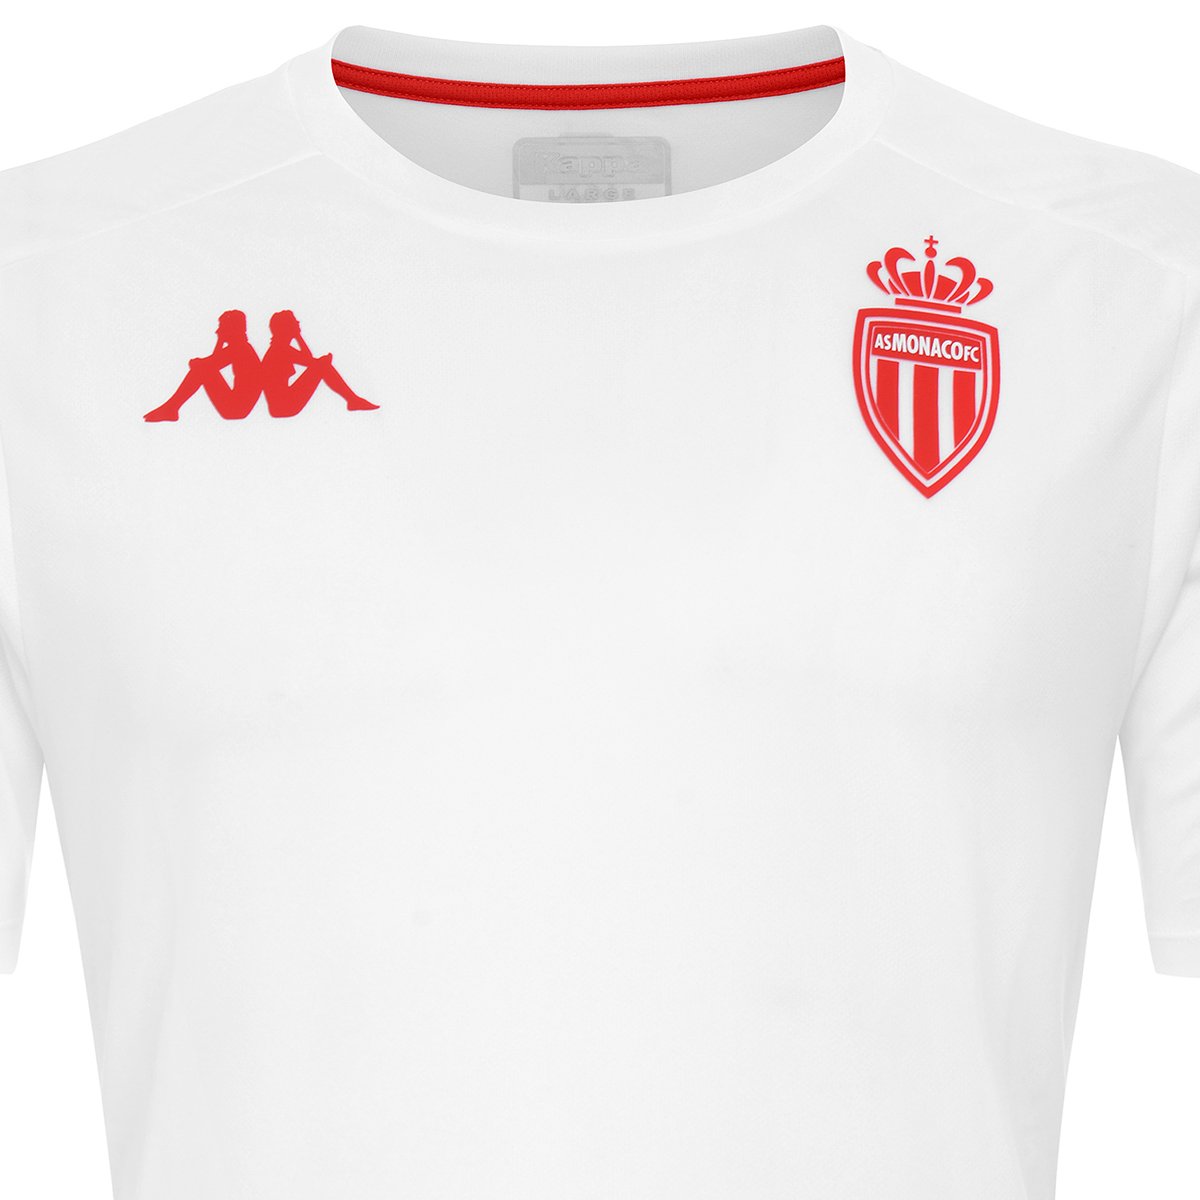 Camiseta Aboes Pro 4 As Monaco Blanco Hombre - Imagen 4